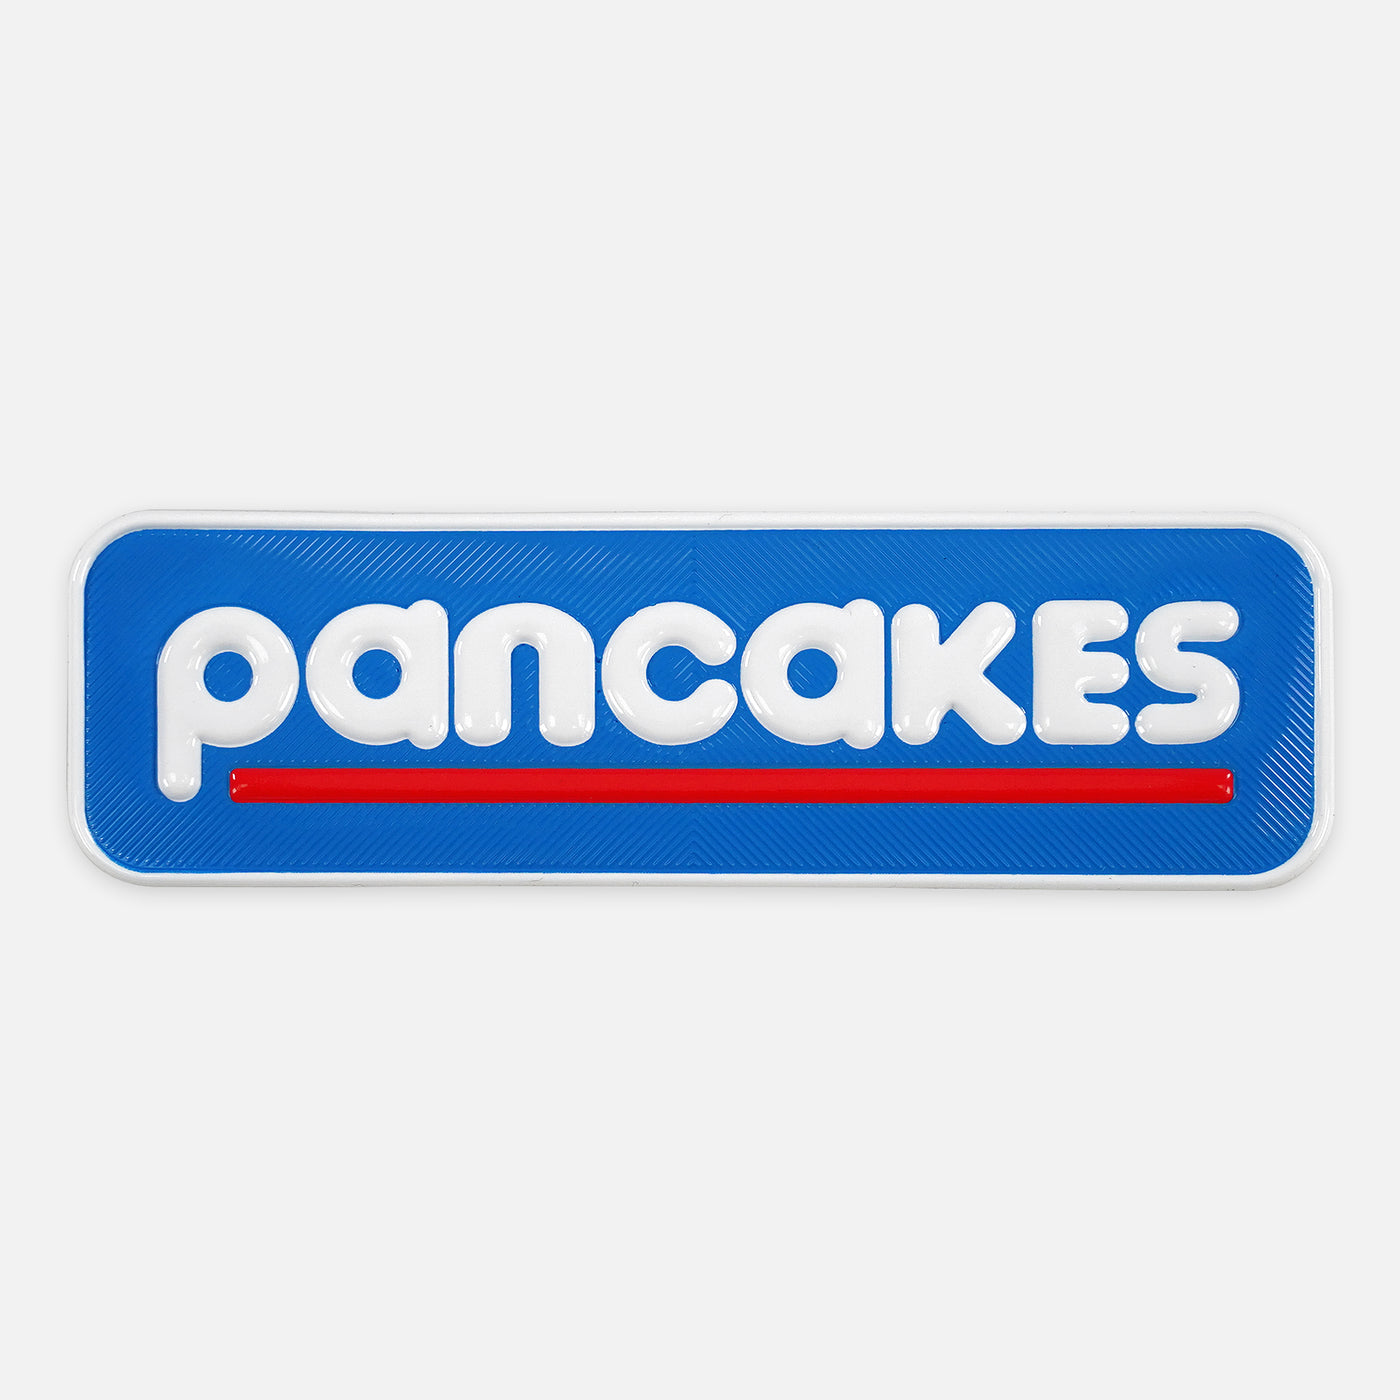 Pancakes Patch